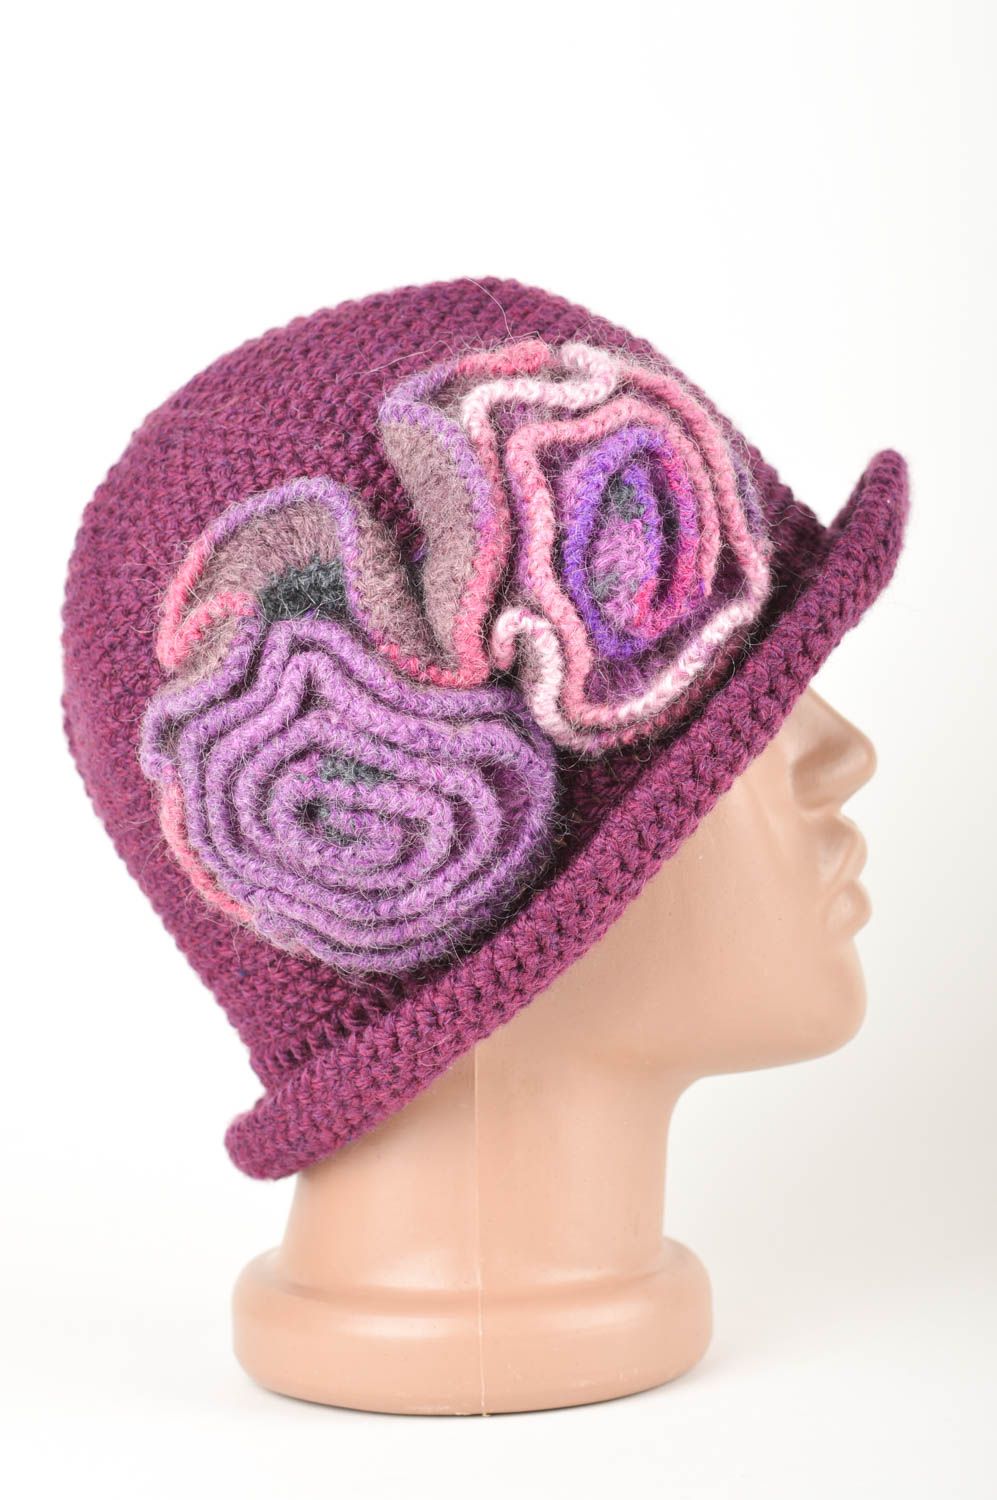 Crochet hat handmade ladies hat womens hat crochet accessories gifts for her photo 3